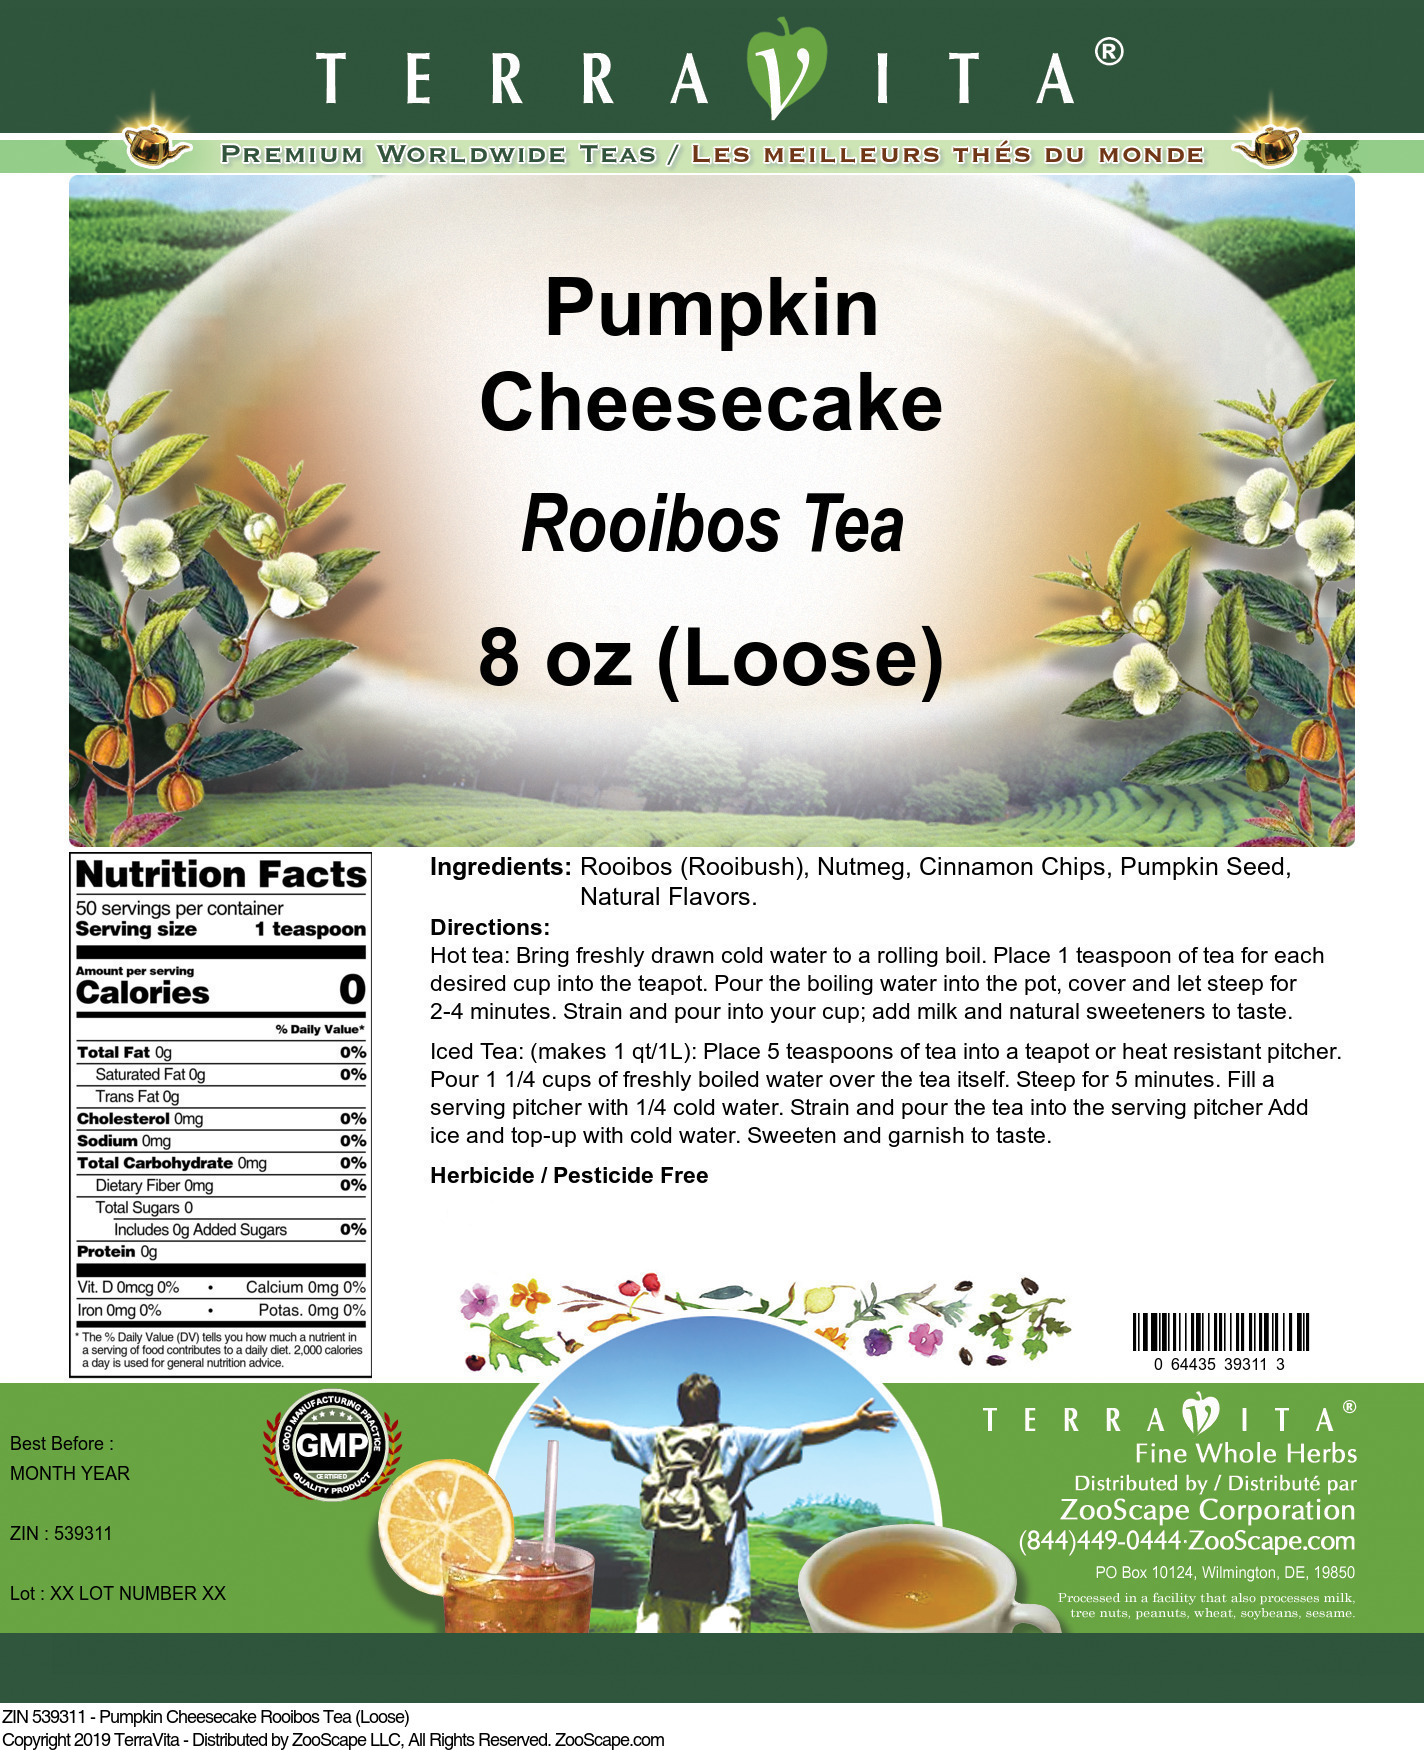 Pumpkin Cheesecake Rooibos Tea (Loose) - Label